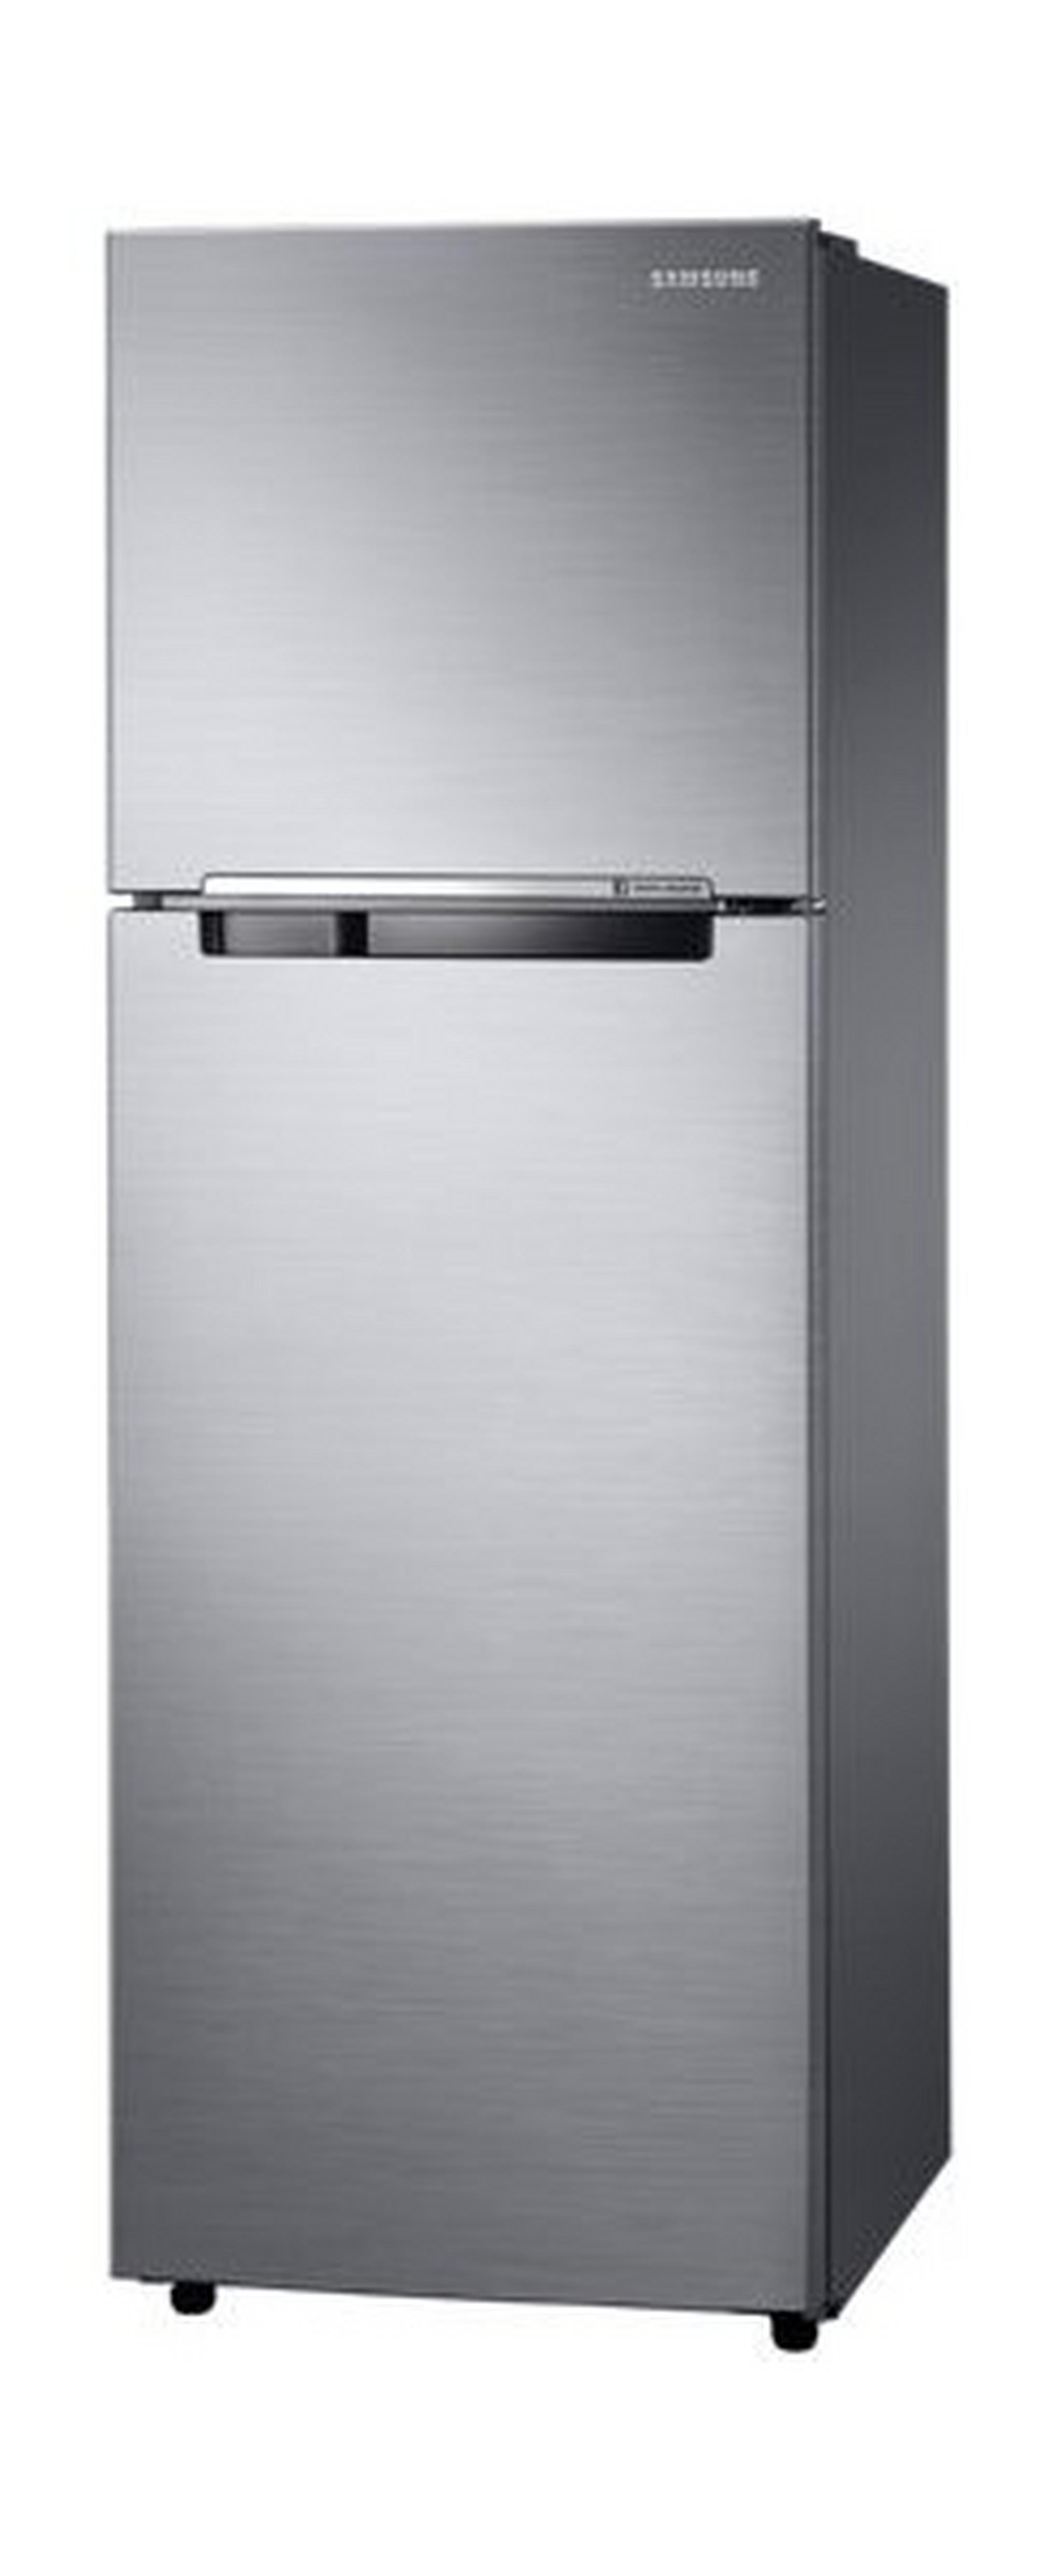 Samsung 11 CFT  Topmount Refrigerator (RT32K3002S8) - Stainless Steel